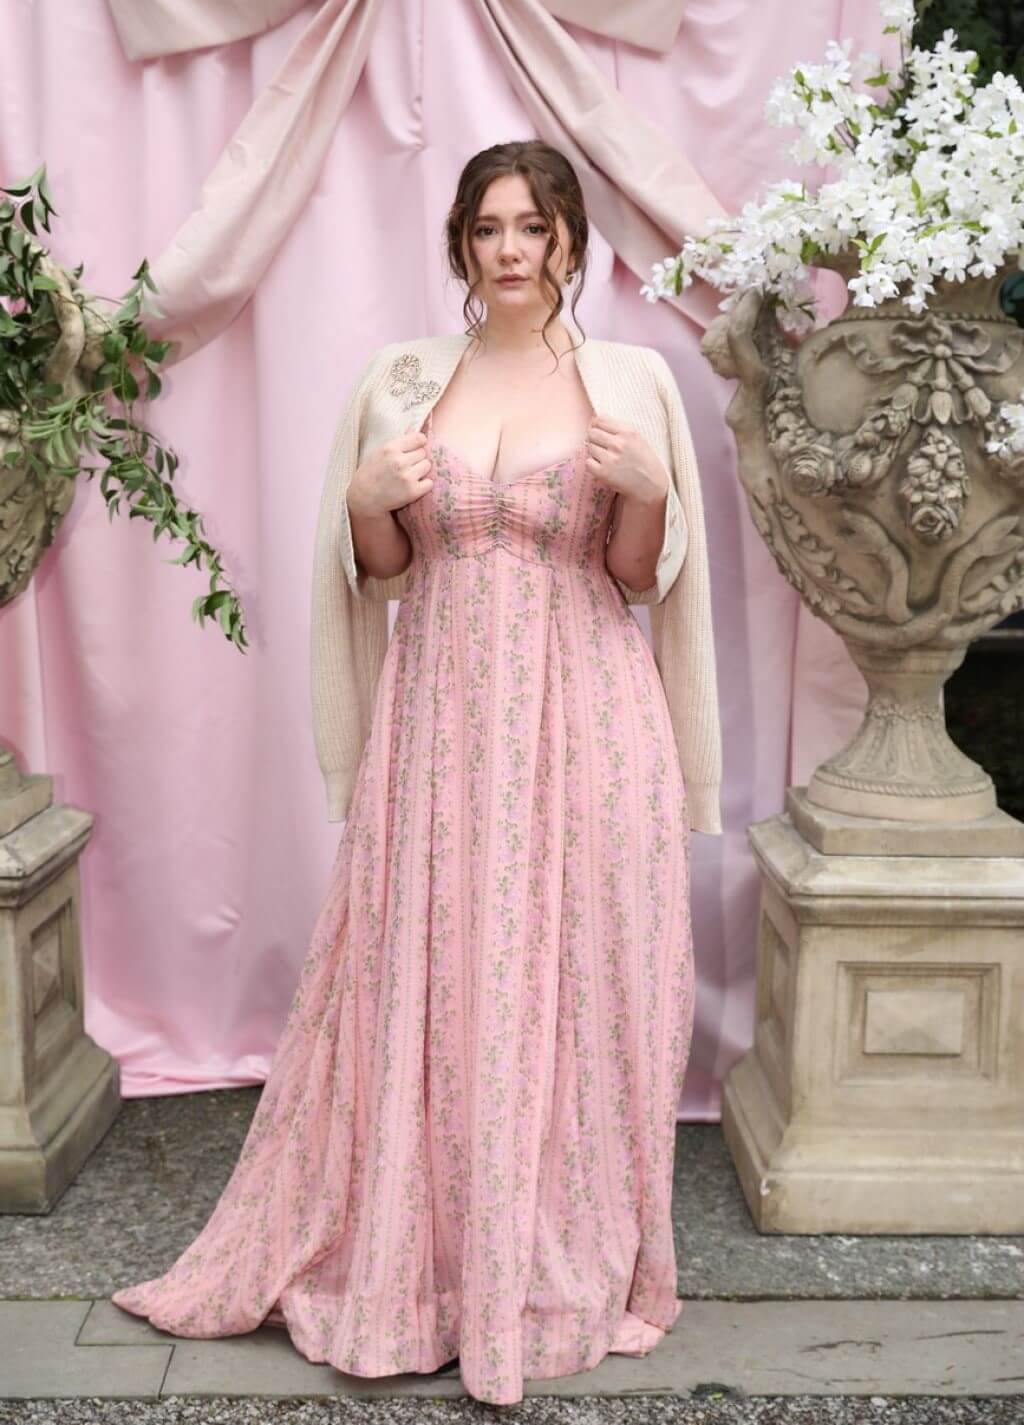 Emma Kenney In Dusky Pink Neckline Long Gown